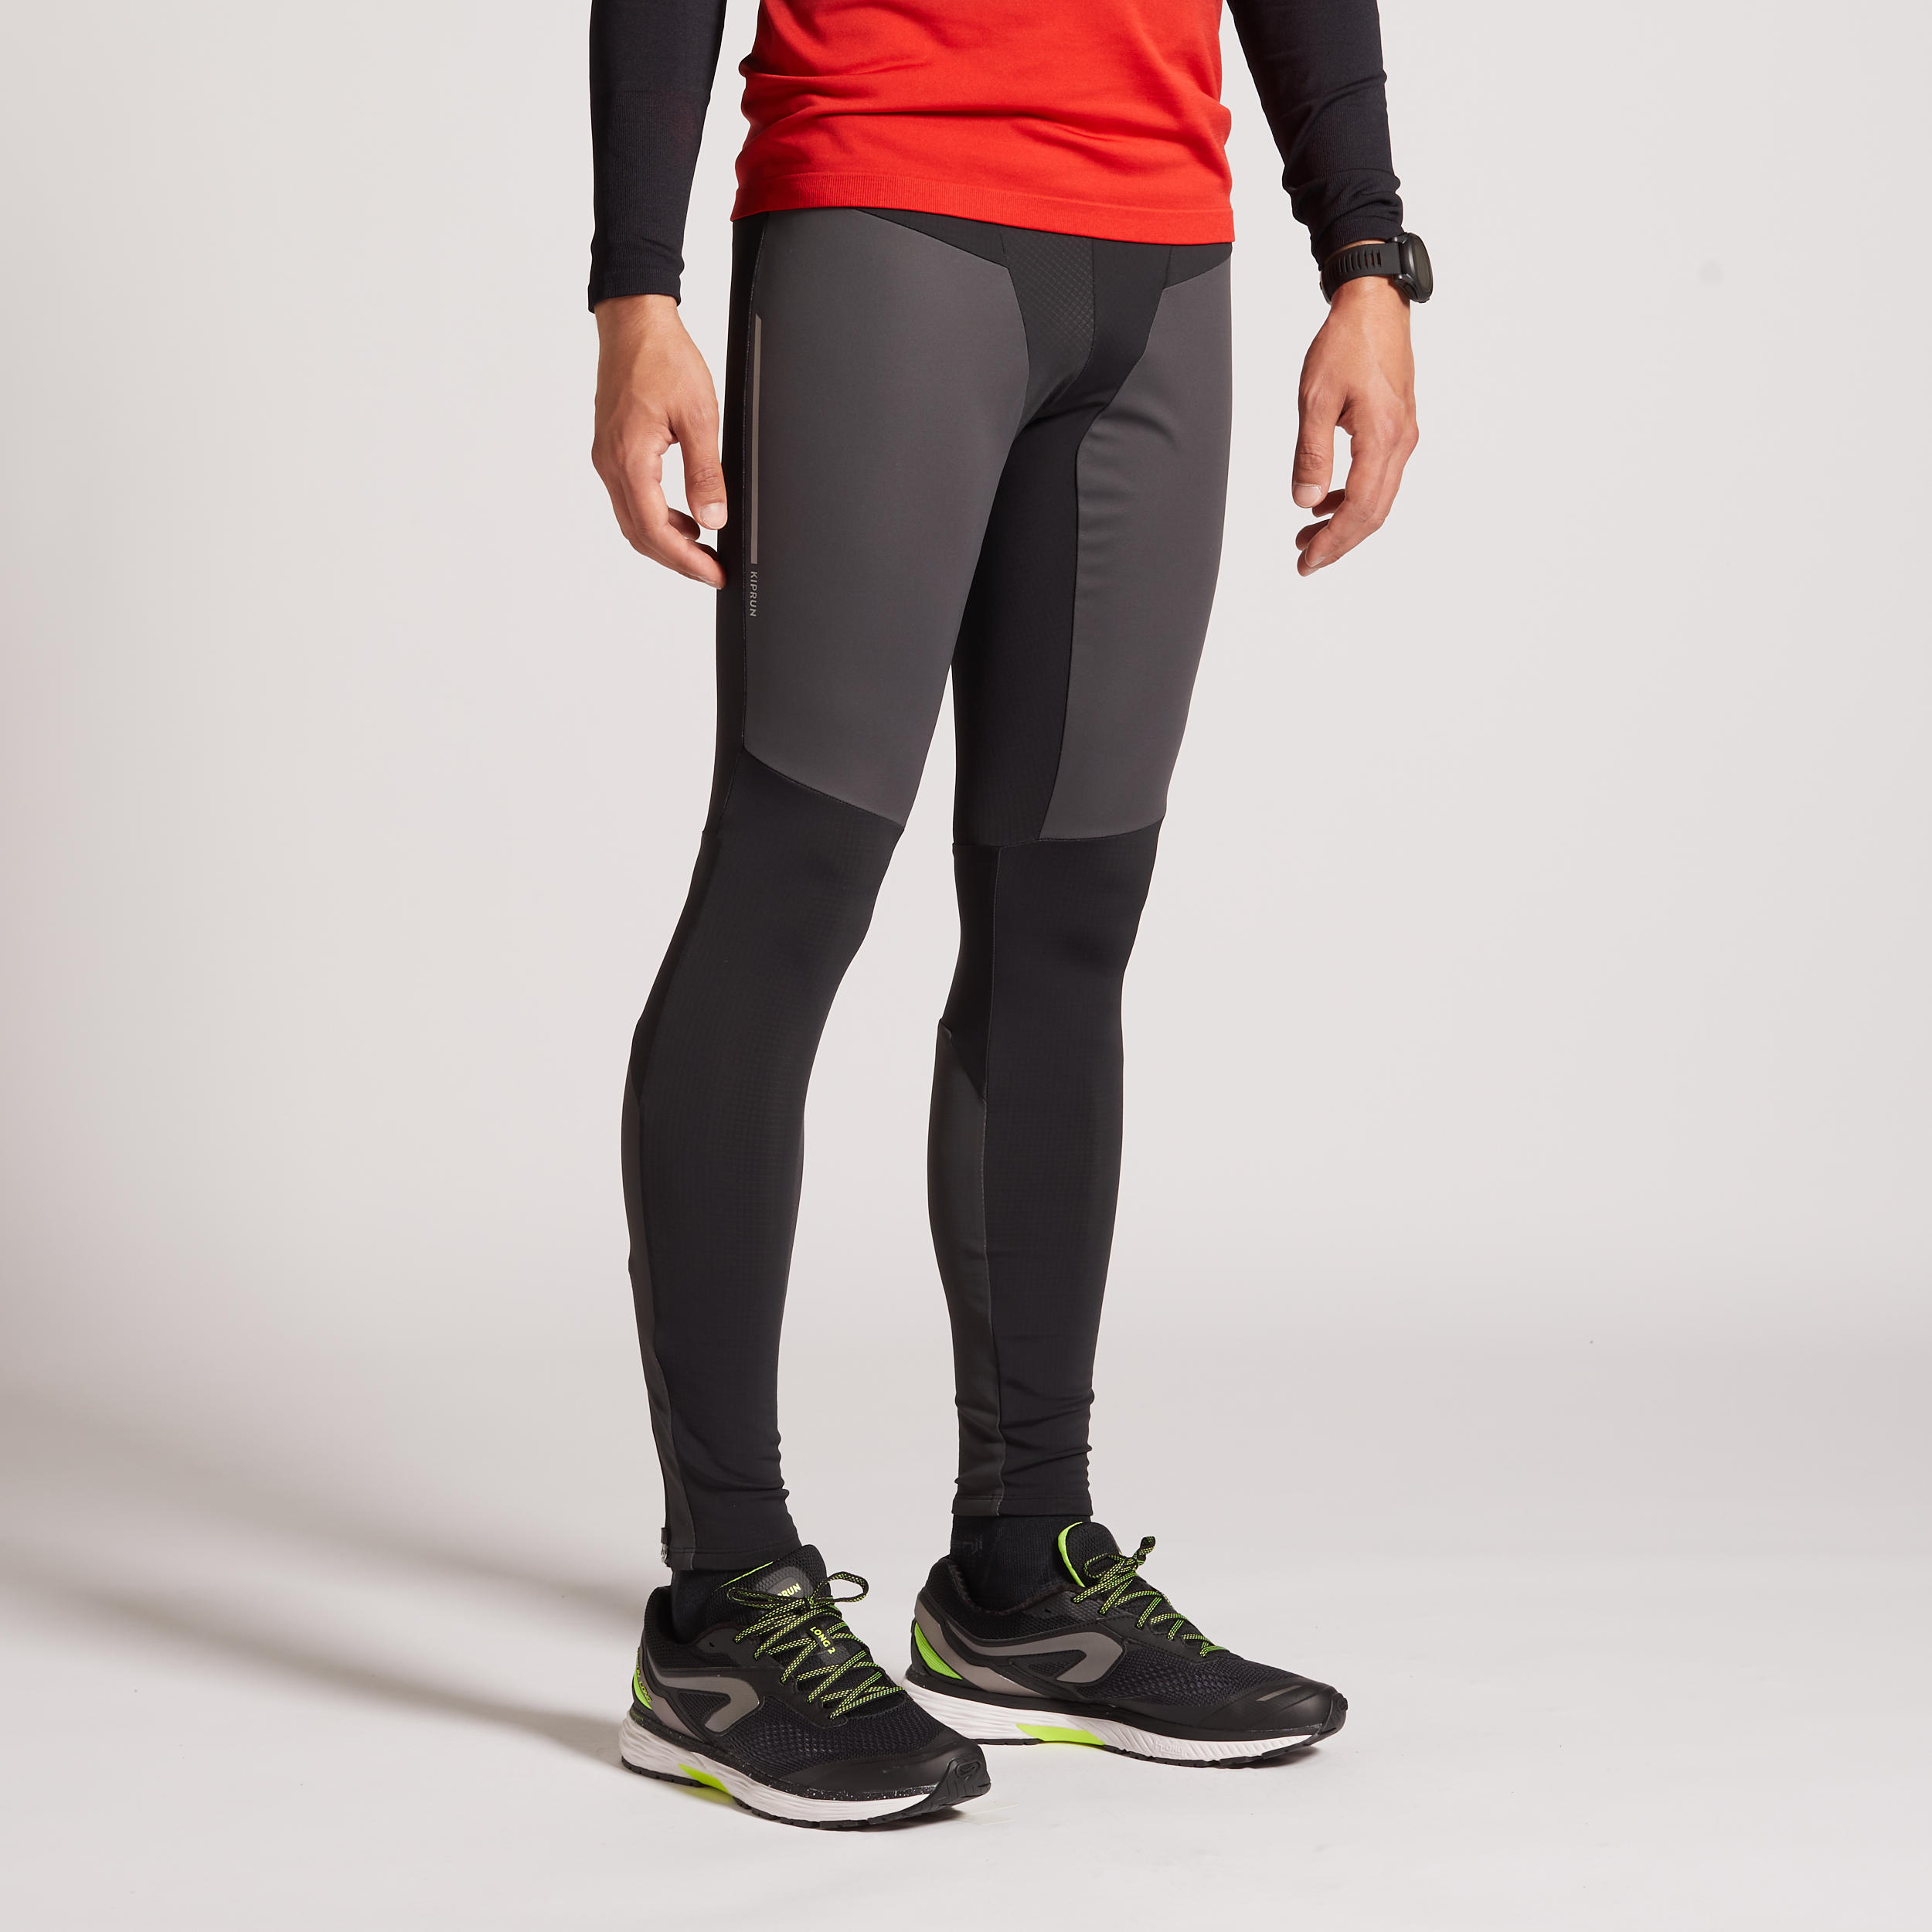 Men's Running Tights - Warm Grey/Black - Black, Carbon grey - Kiprun -  Decathlon